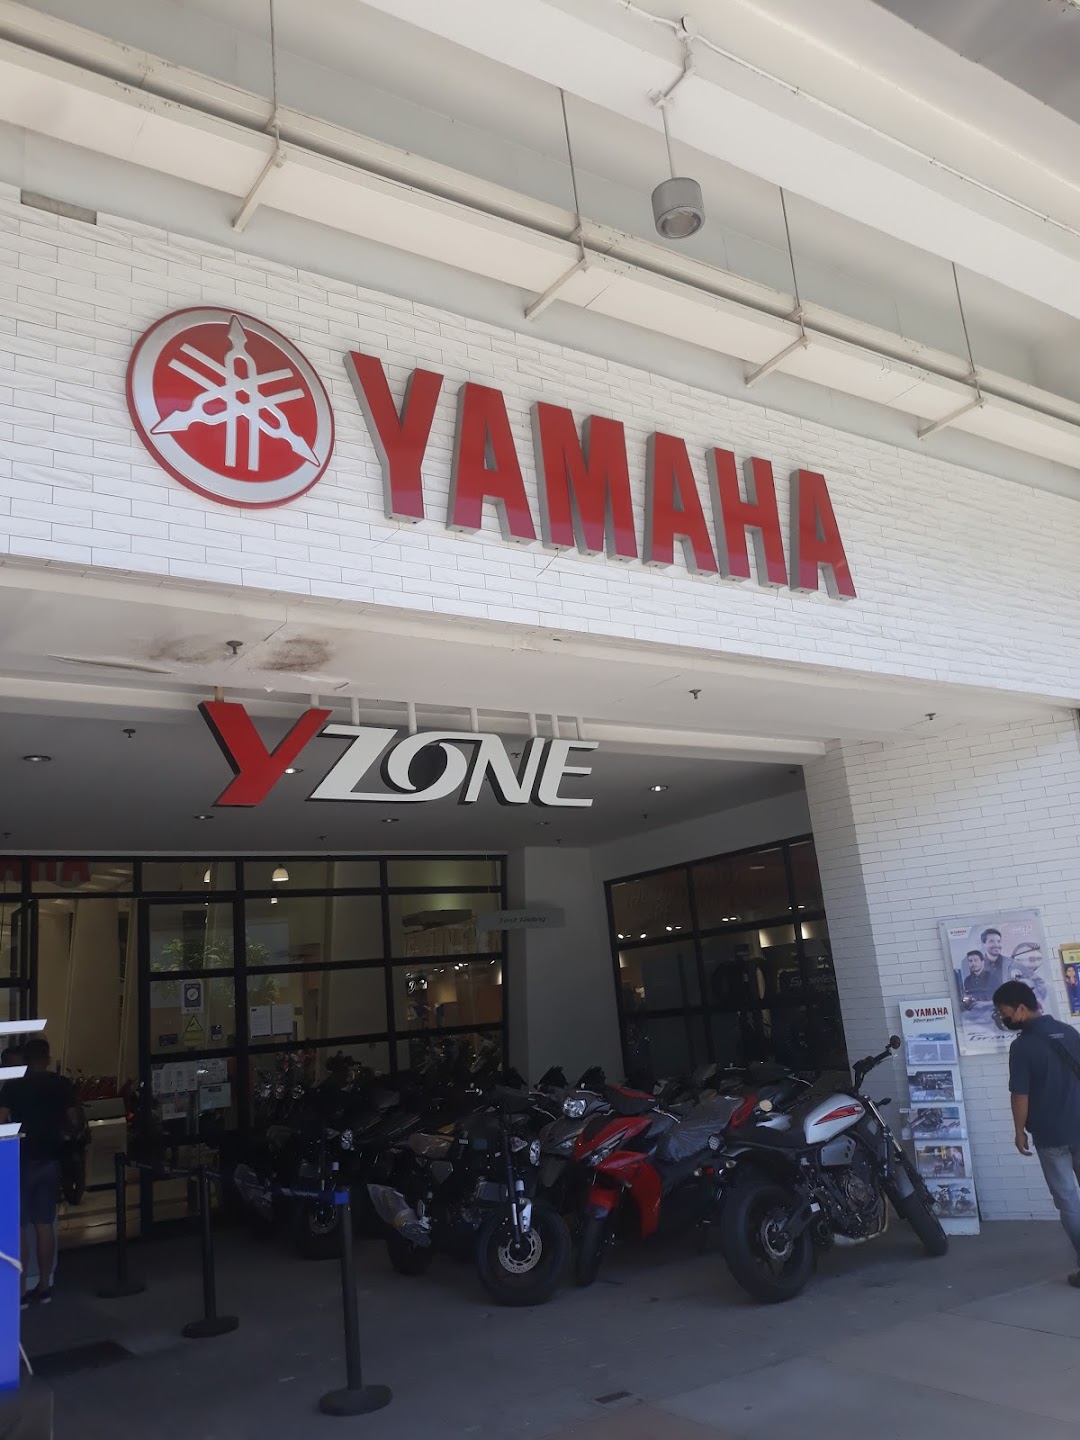 Yamaha Yzone